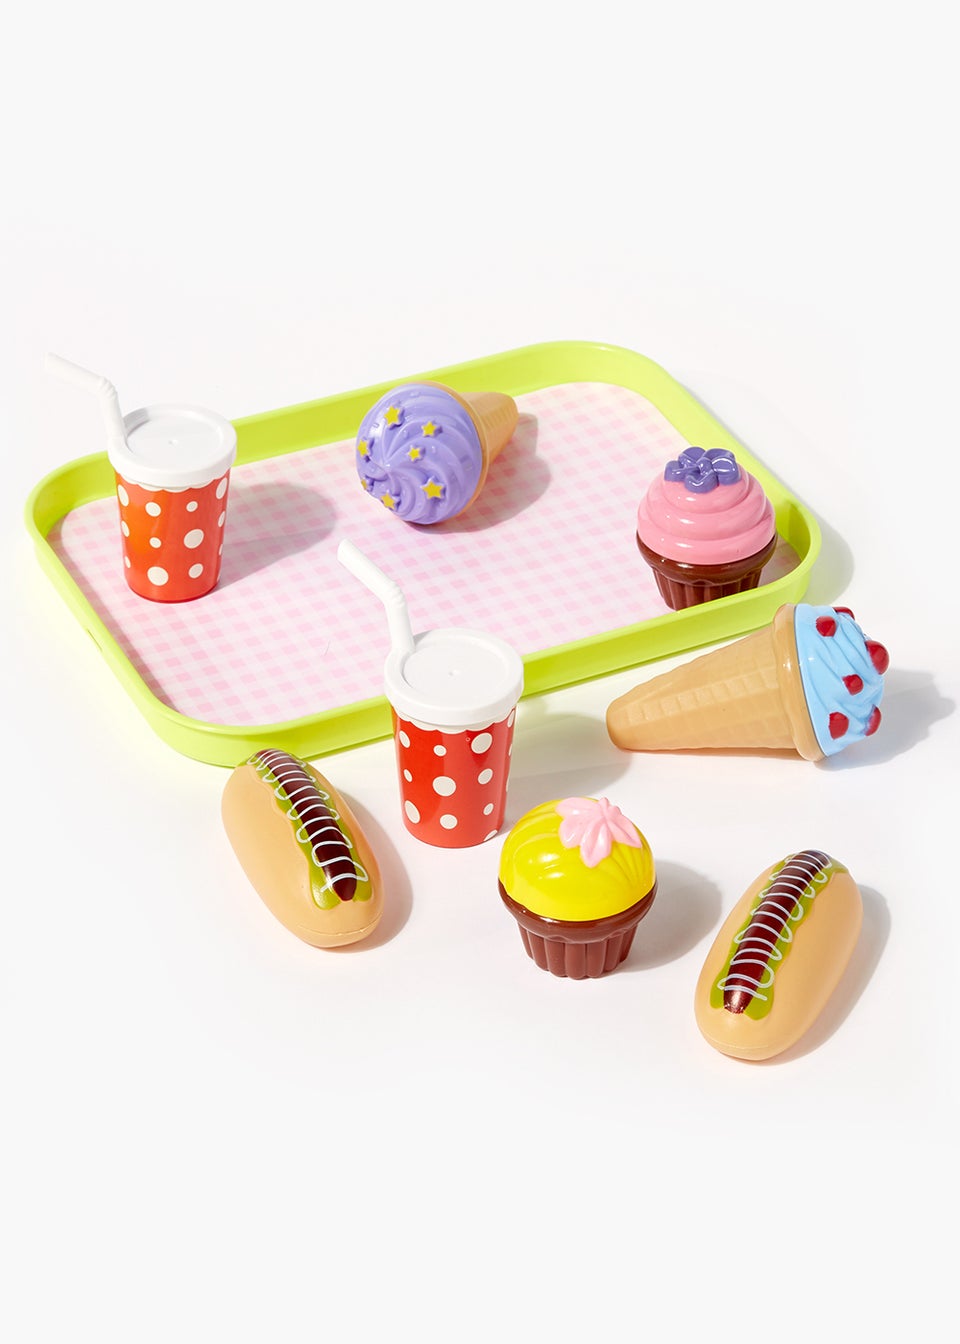 Kids Dessert Food Tray Play Set